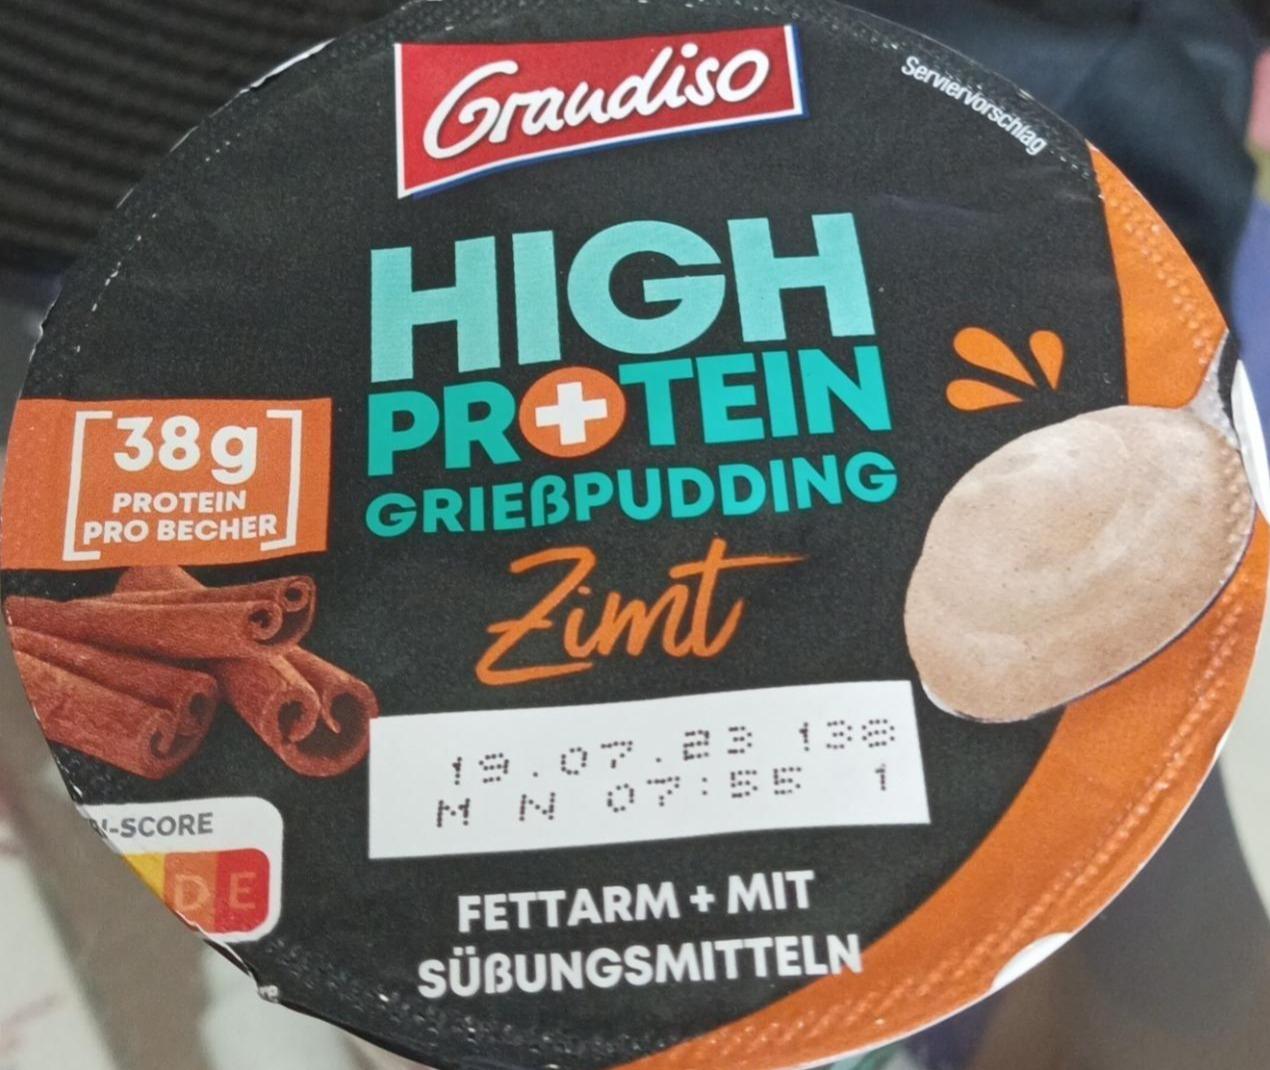 Fotografie - High protein Grisspudding Graudiso